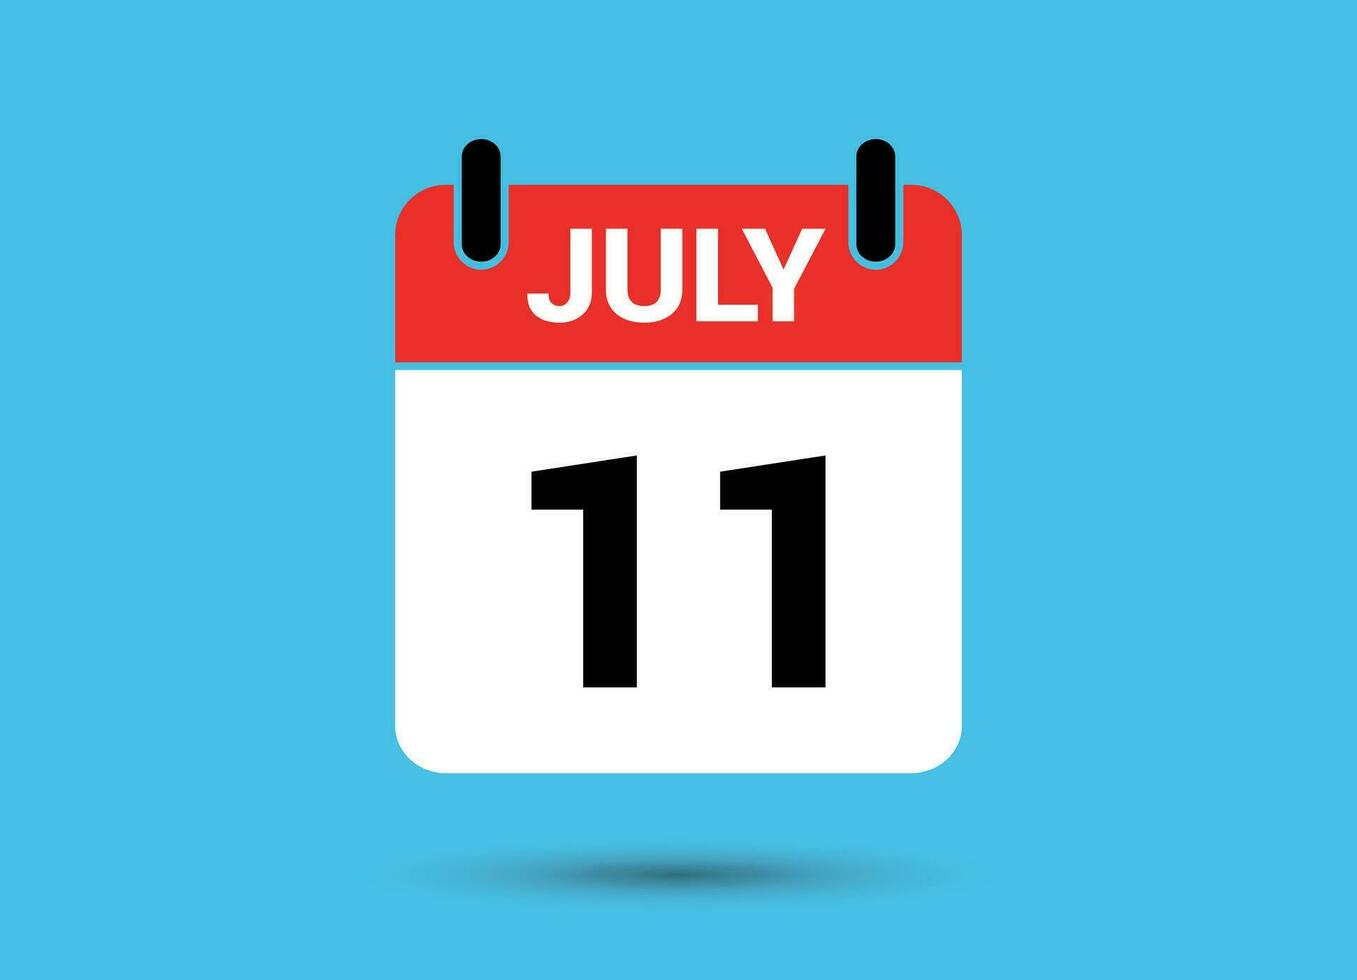 Juli 11 Kalender Datum eben Symbol Tag 11 Vektor Illustration